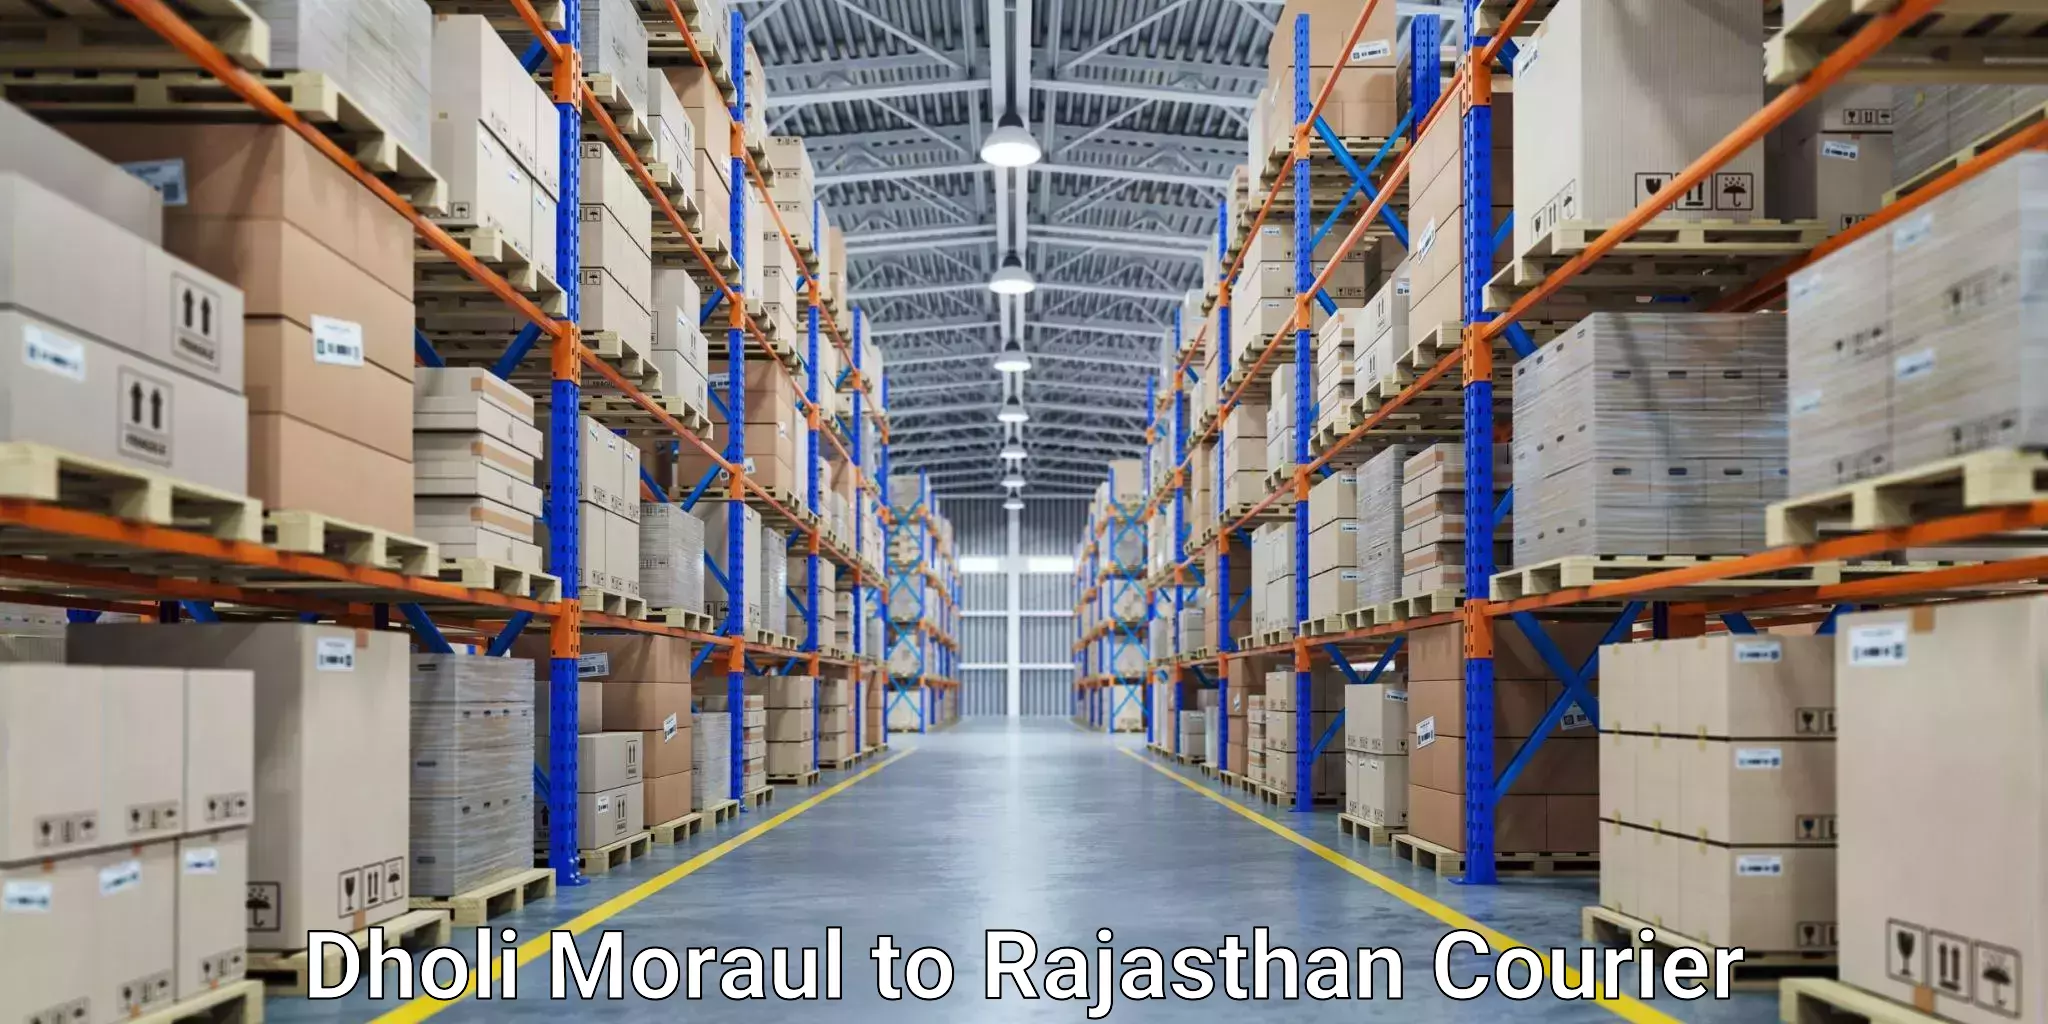 Global shipping networks Dholi Moraul to Udaipur